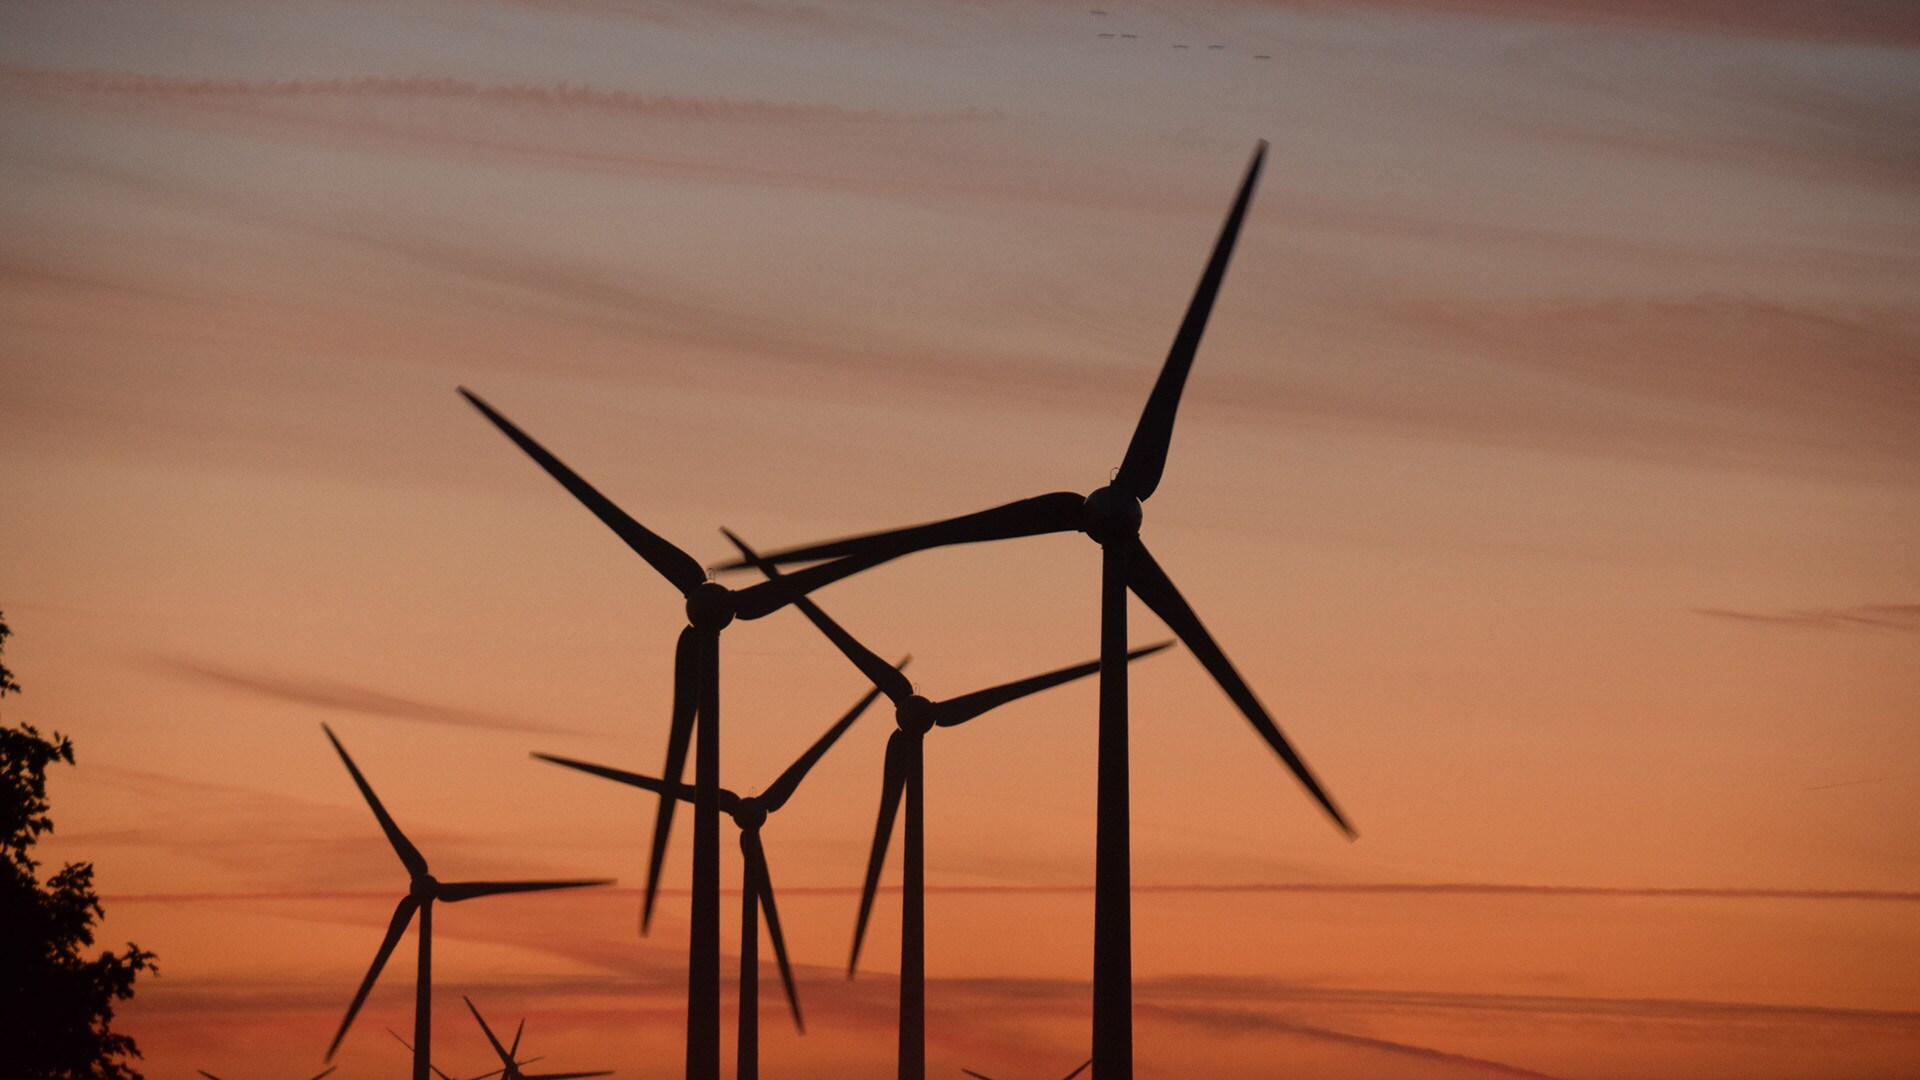 The Mutkalampi Wind Farm: Philips' progress with Sustainability Commitments